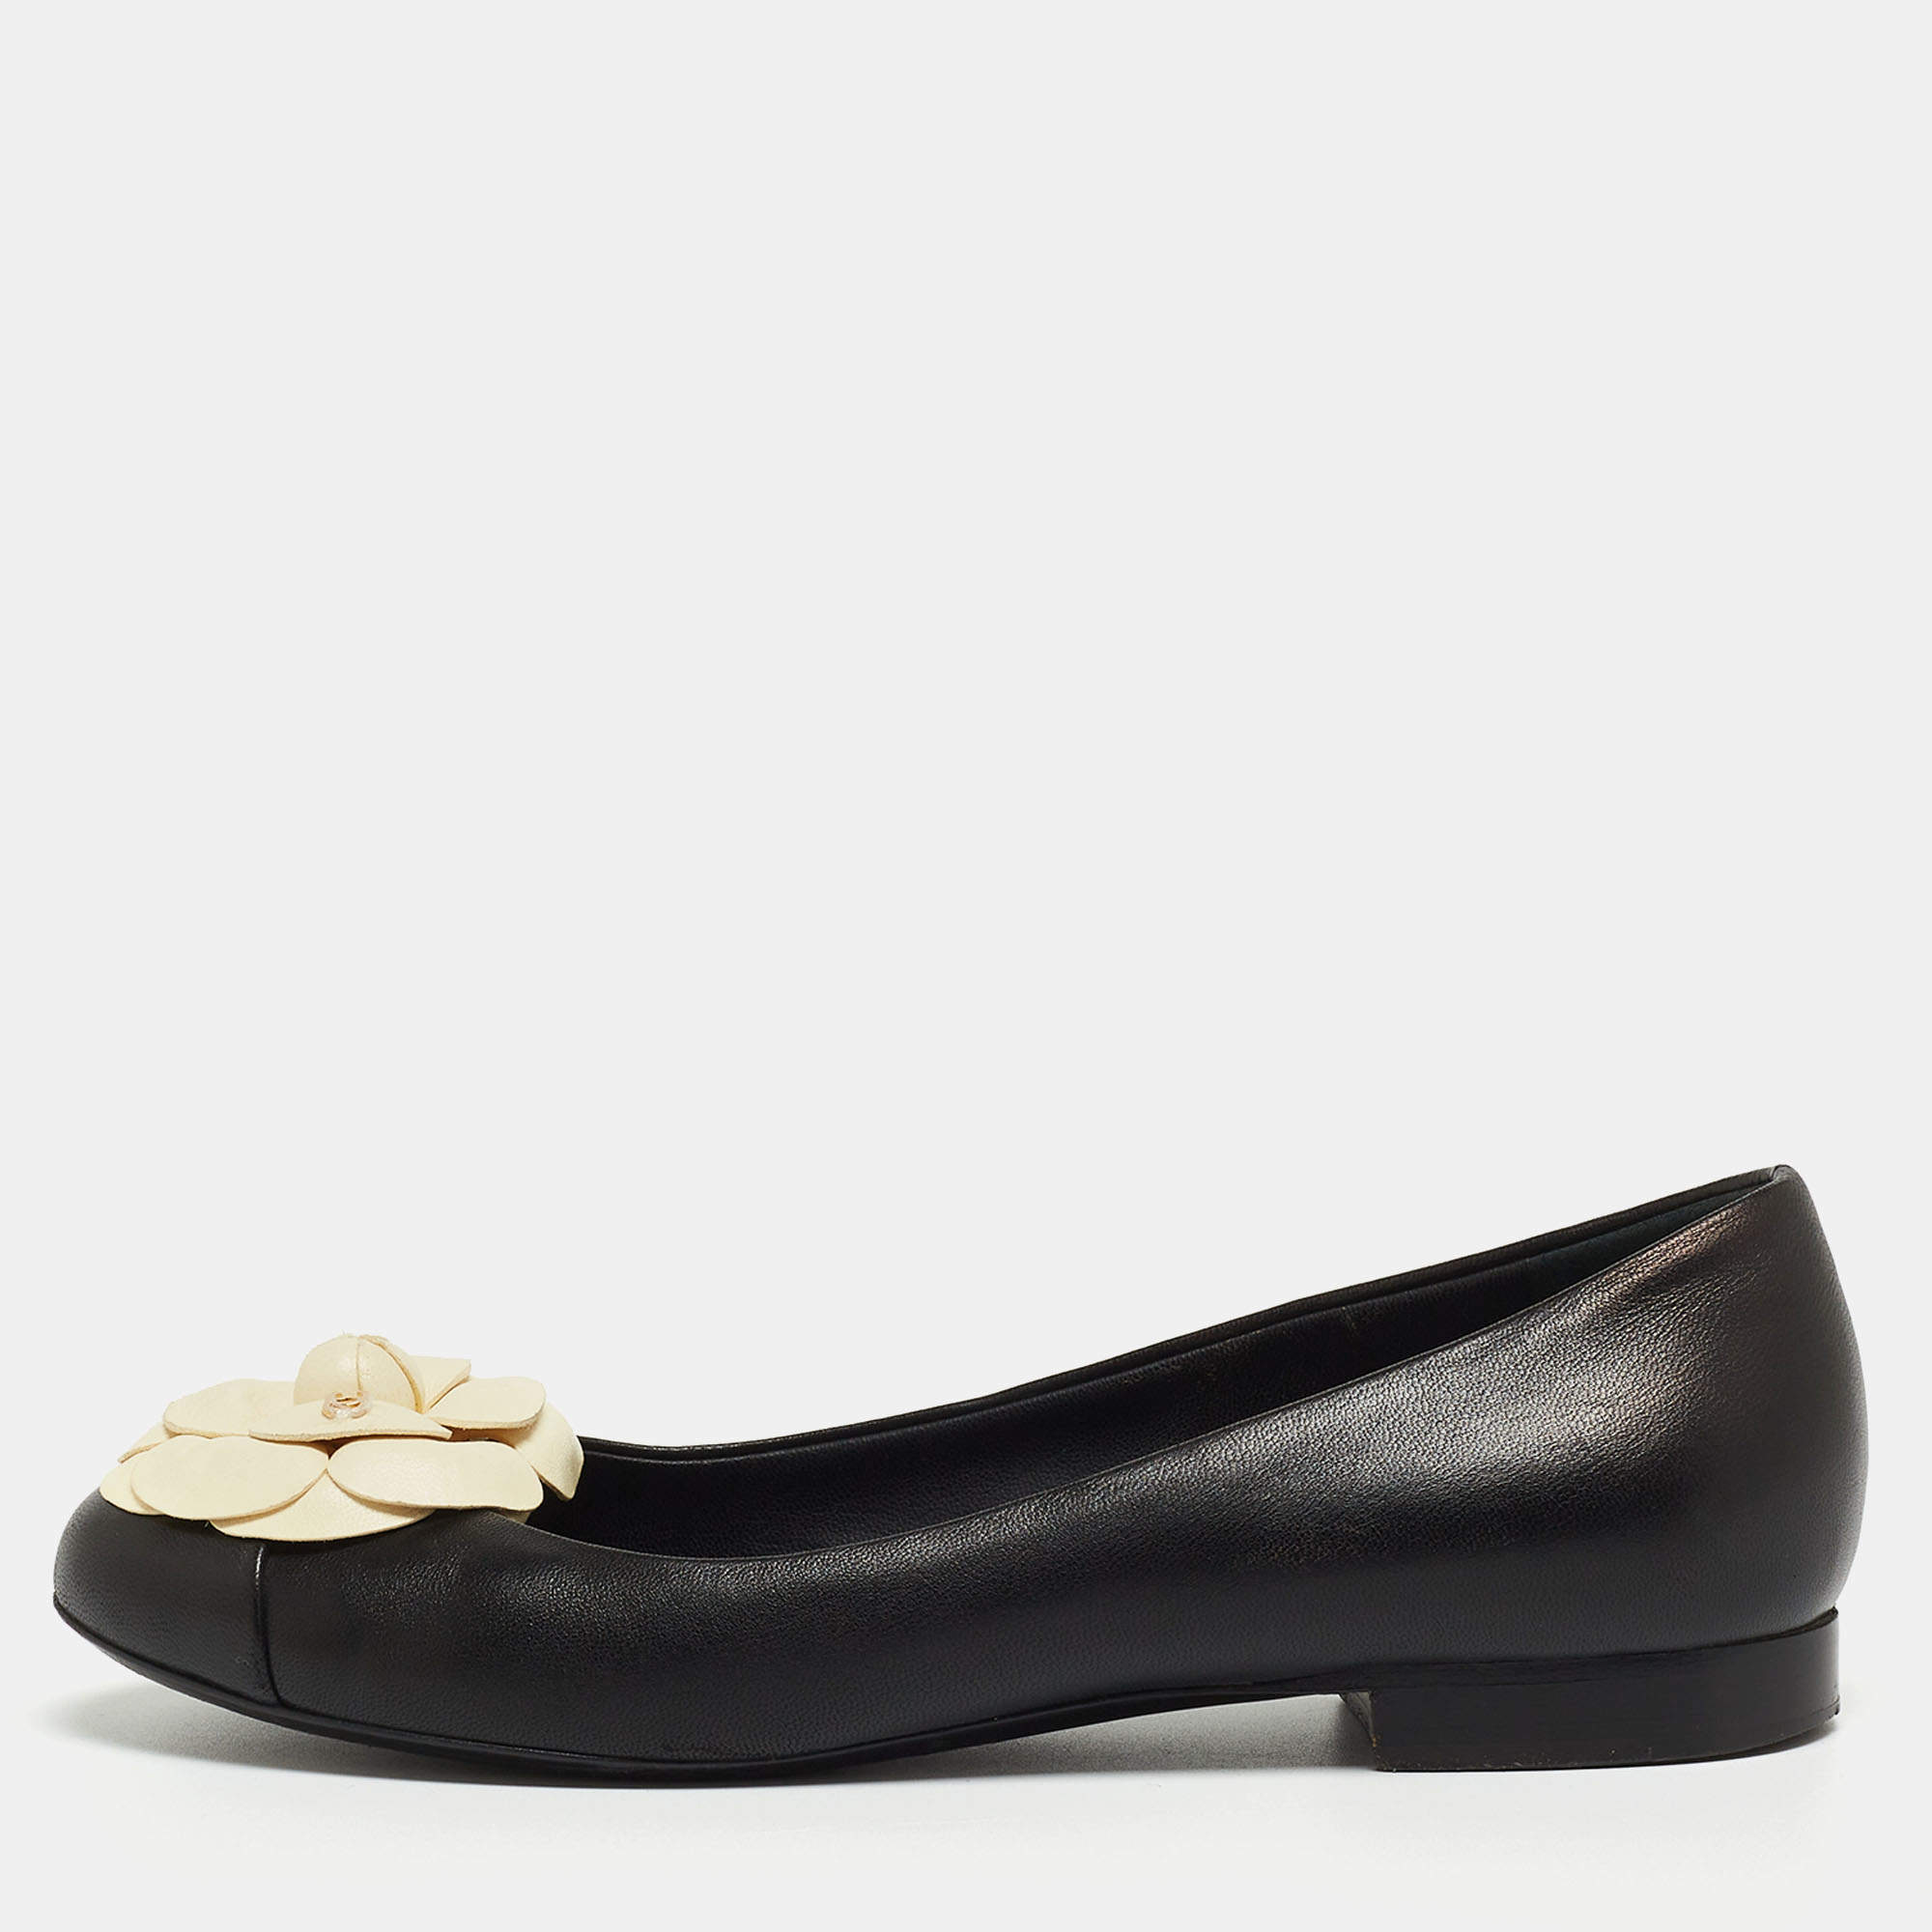 Chanel Black Leather CC Camelia Ballet Flats Size 37